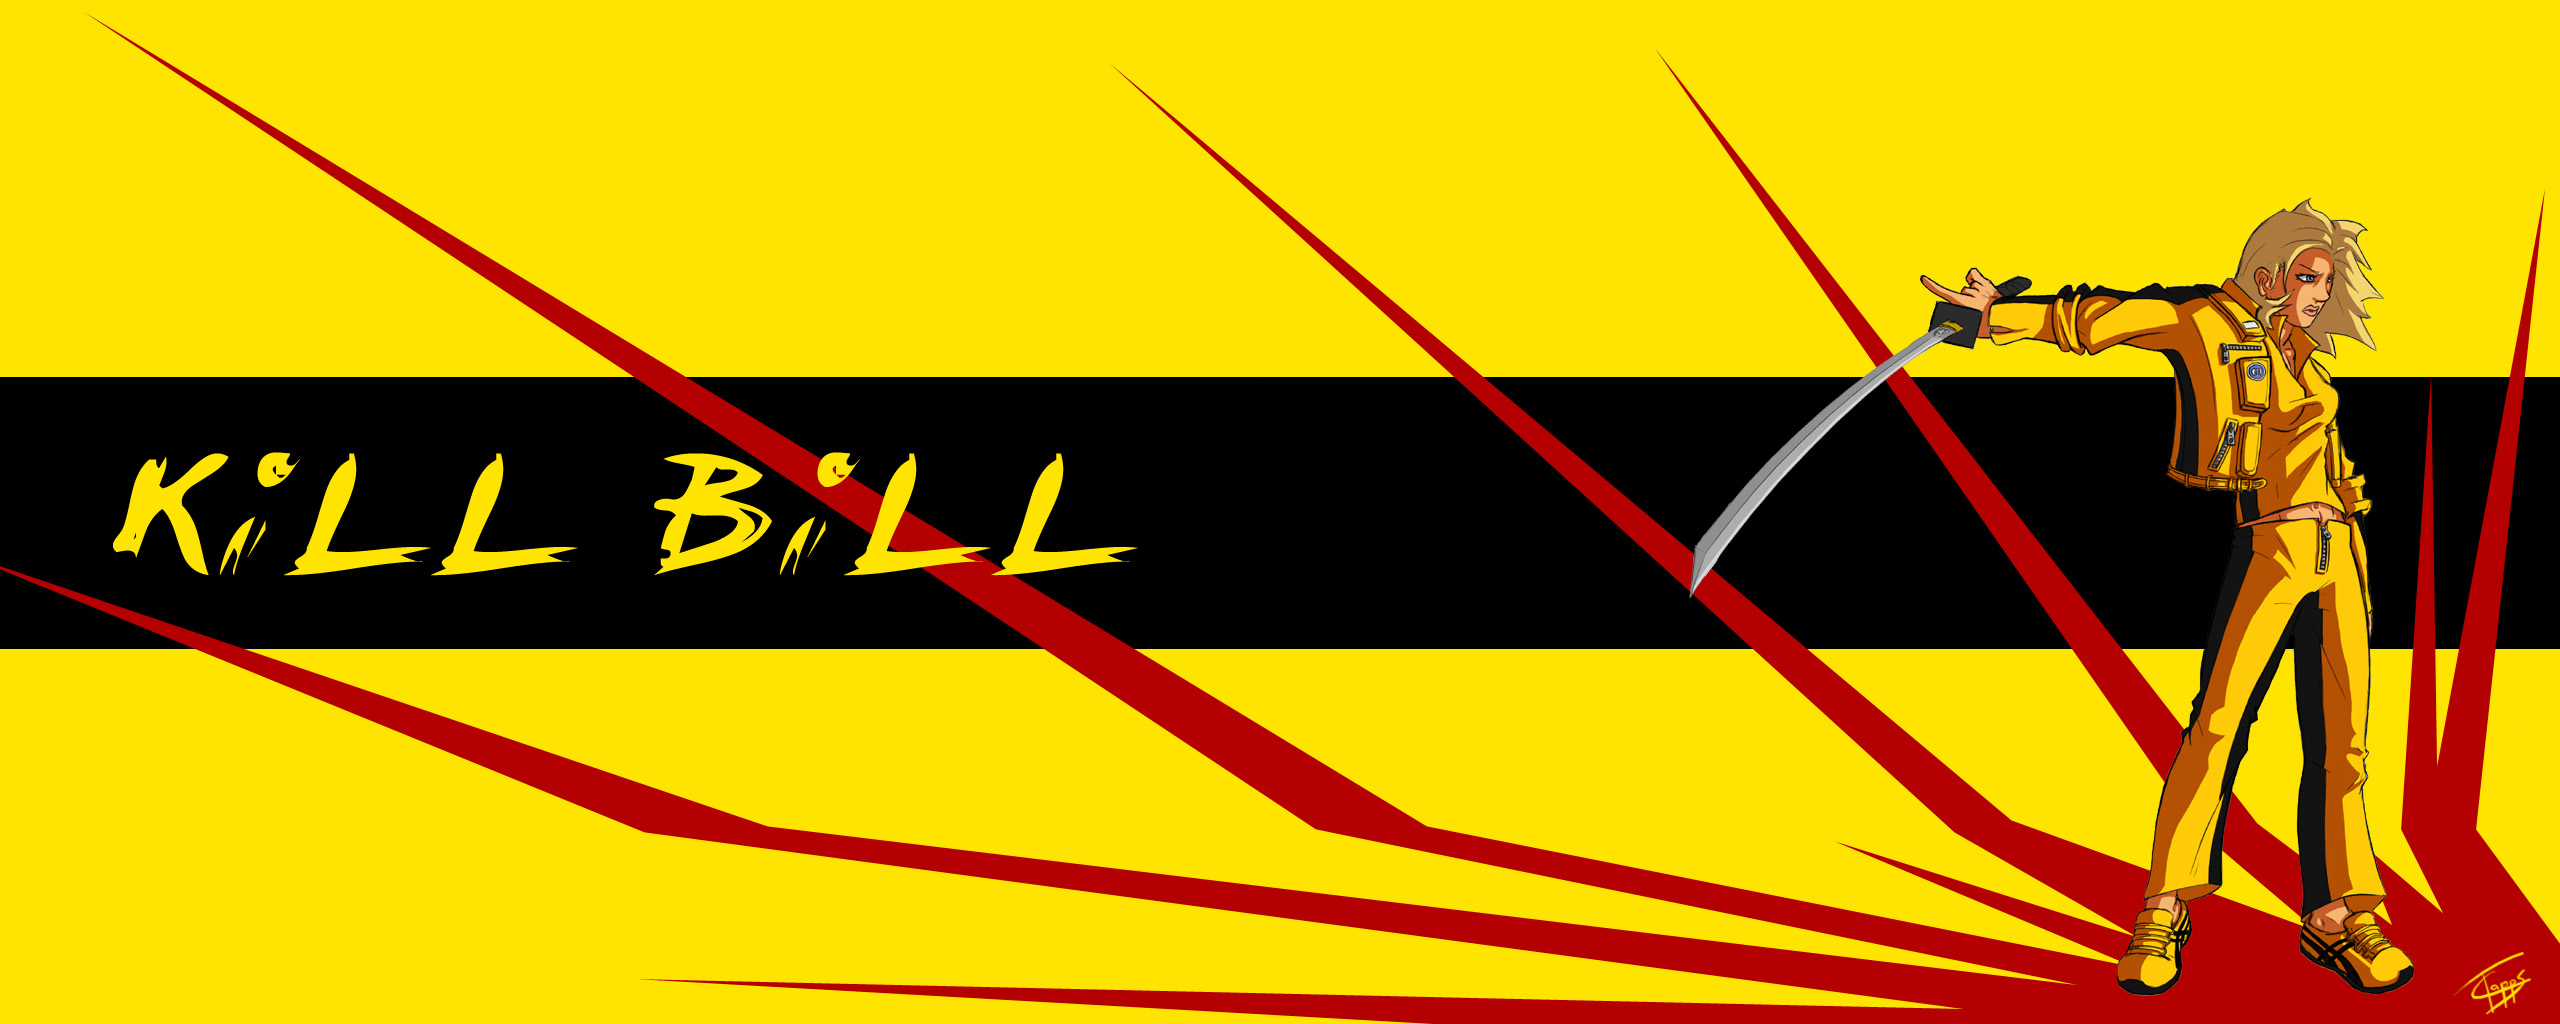 Kill Bill Vol Wallpaper And Background Image Id